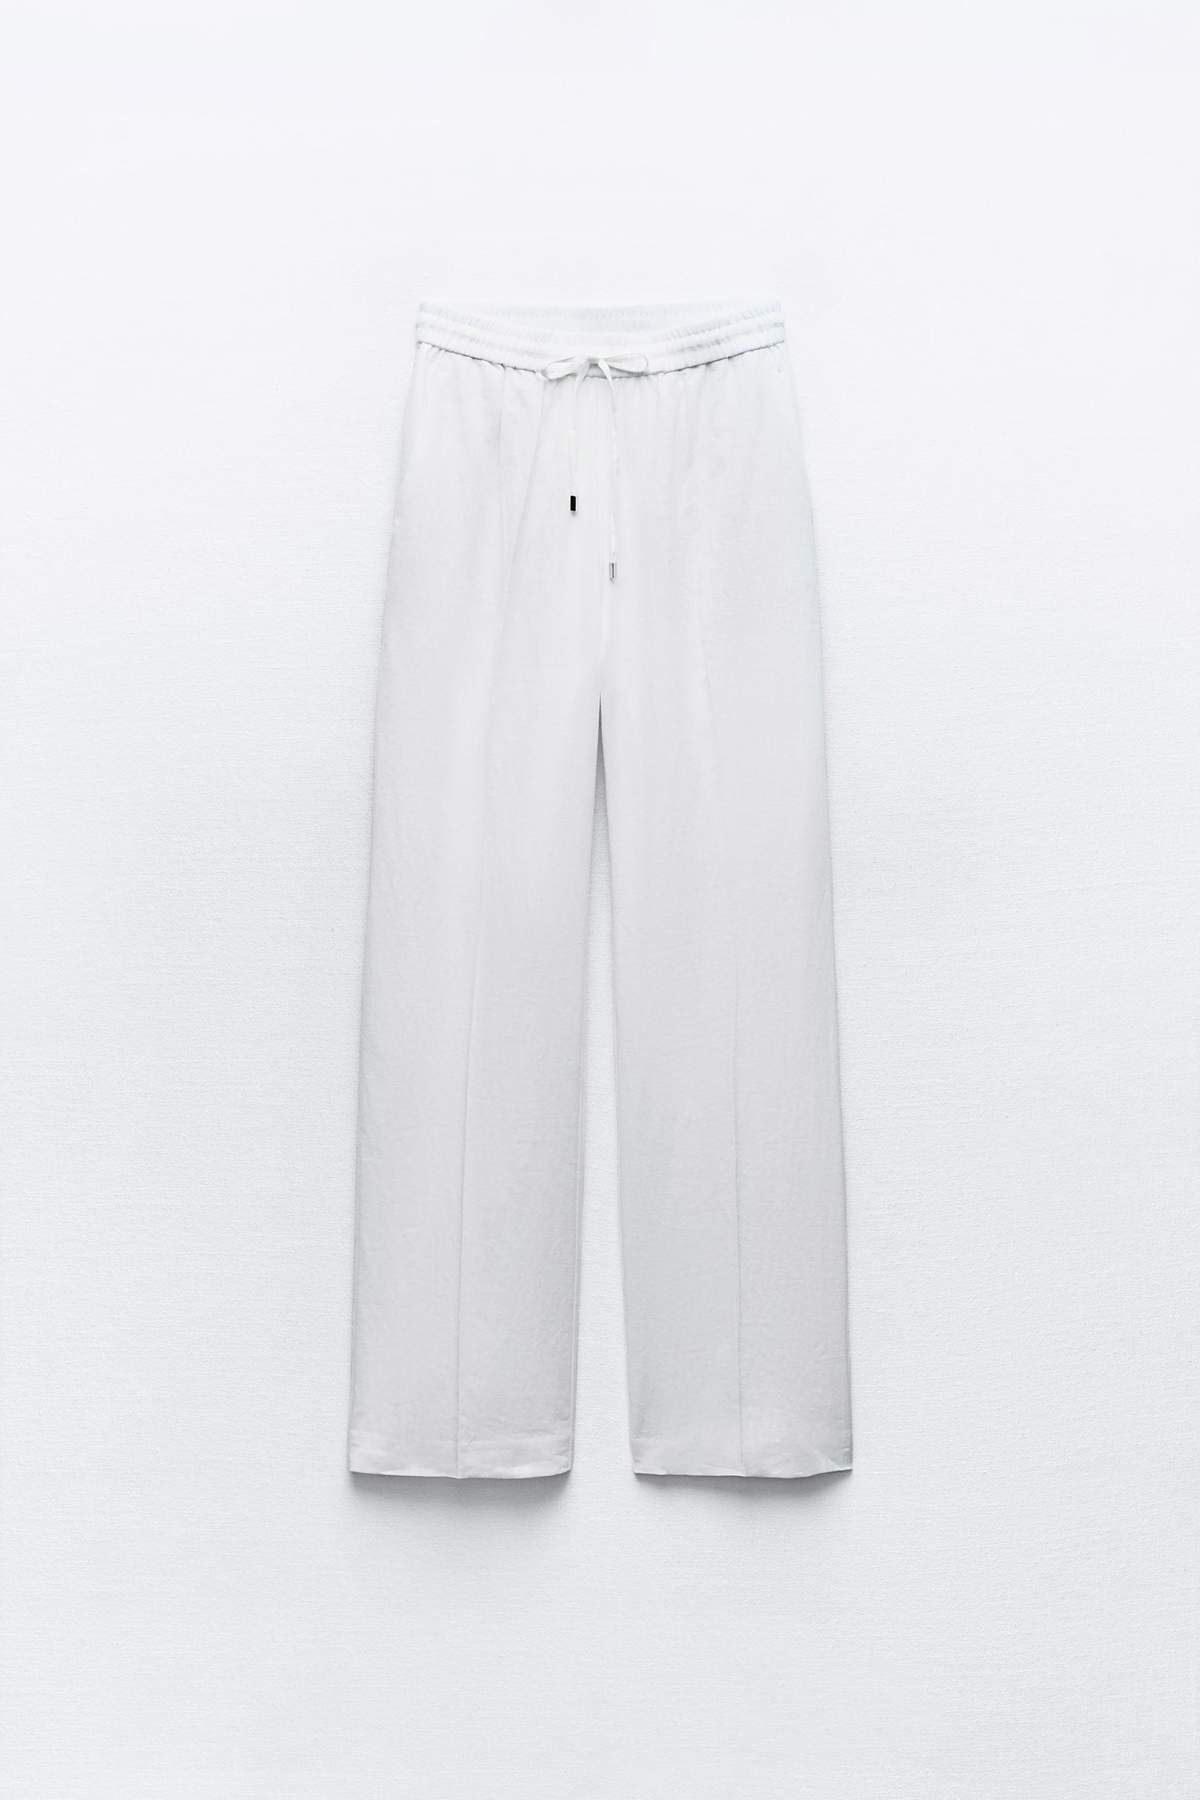 Pantalones blancos Zara